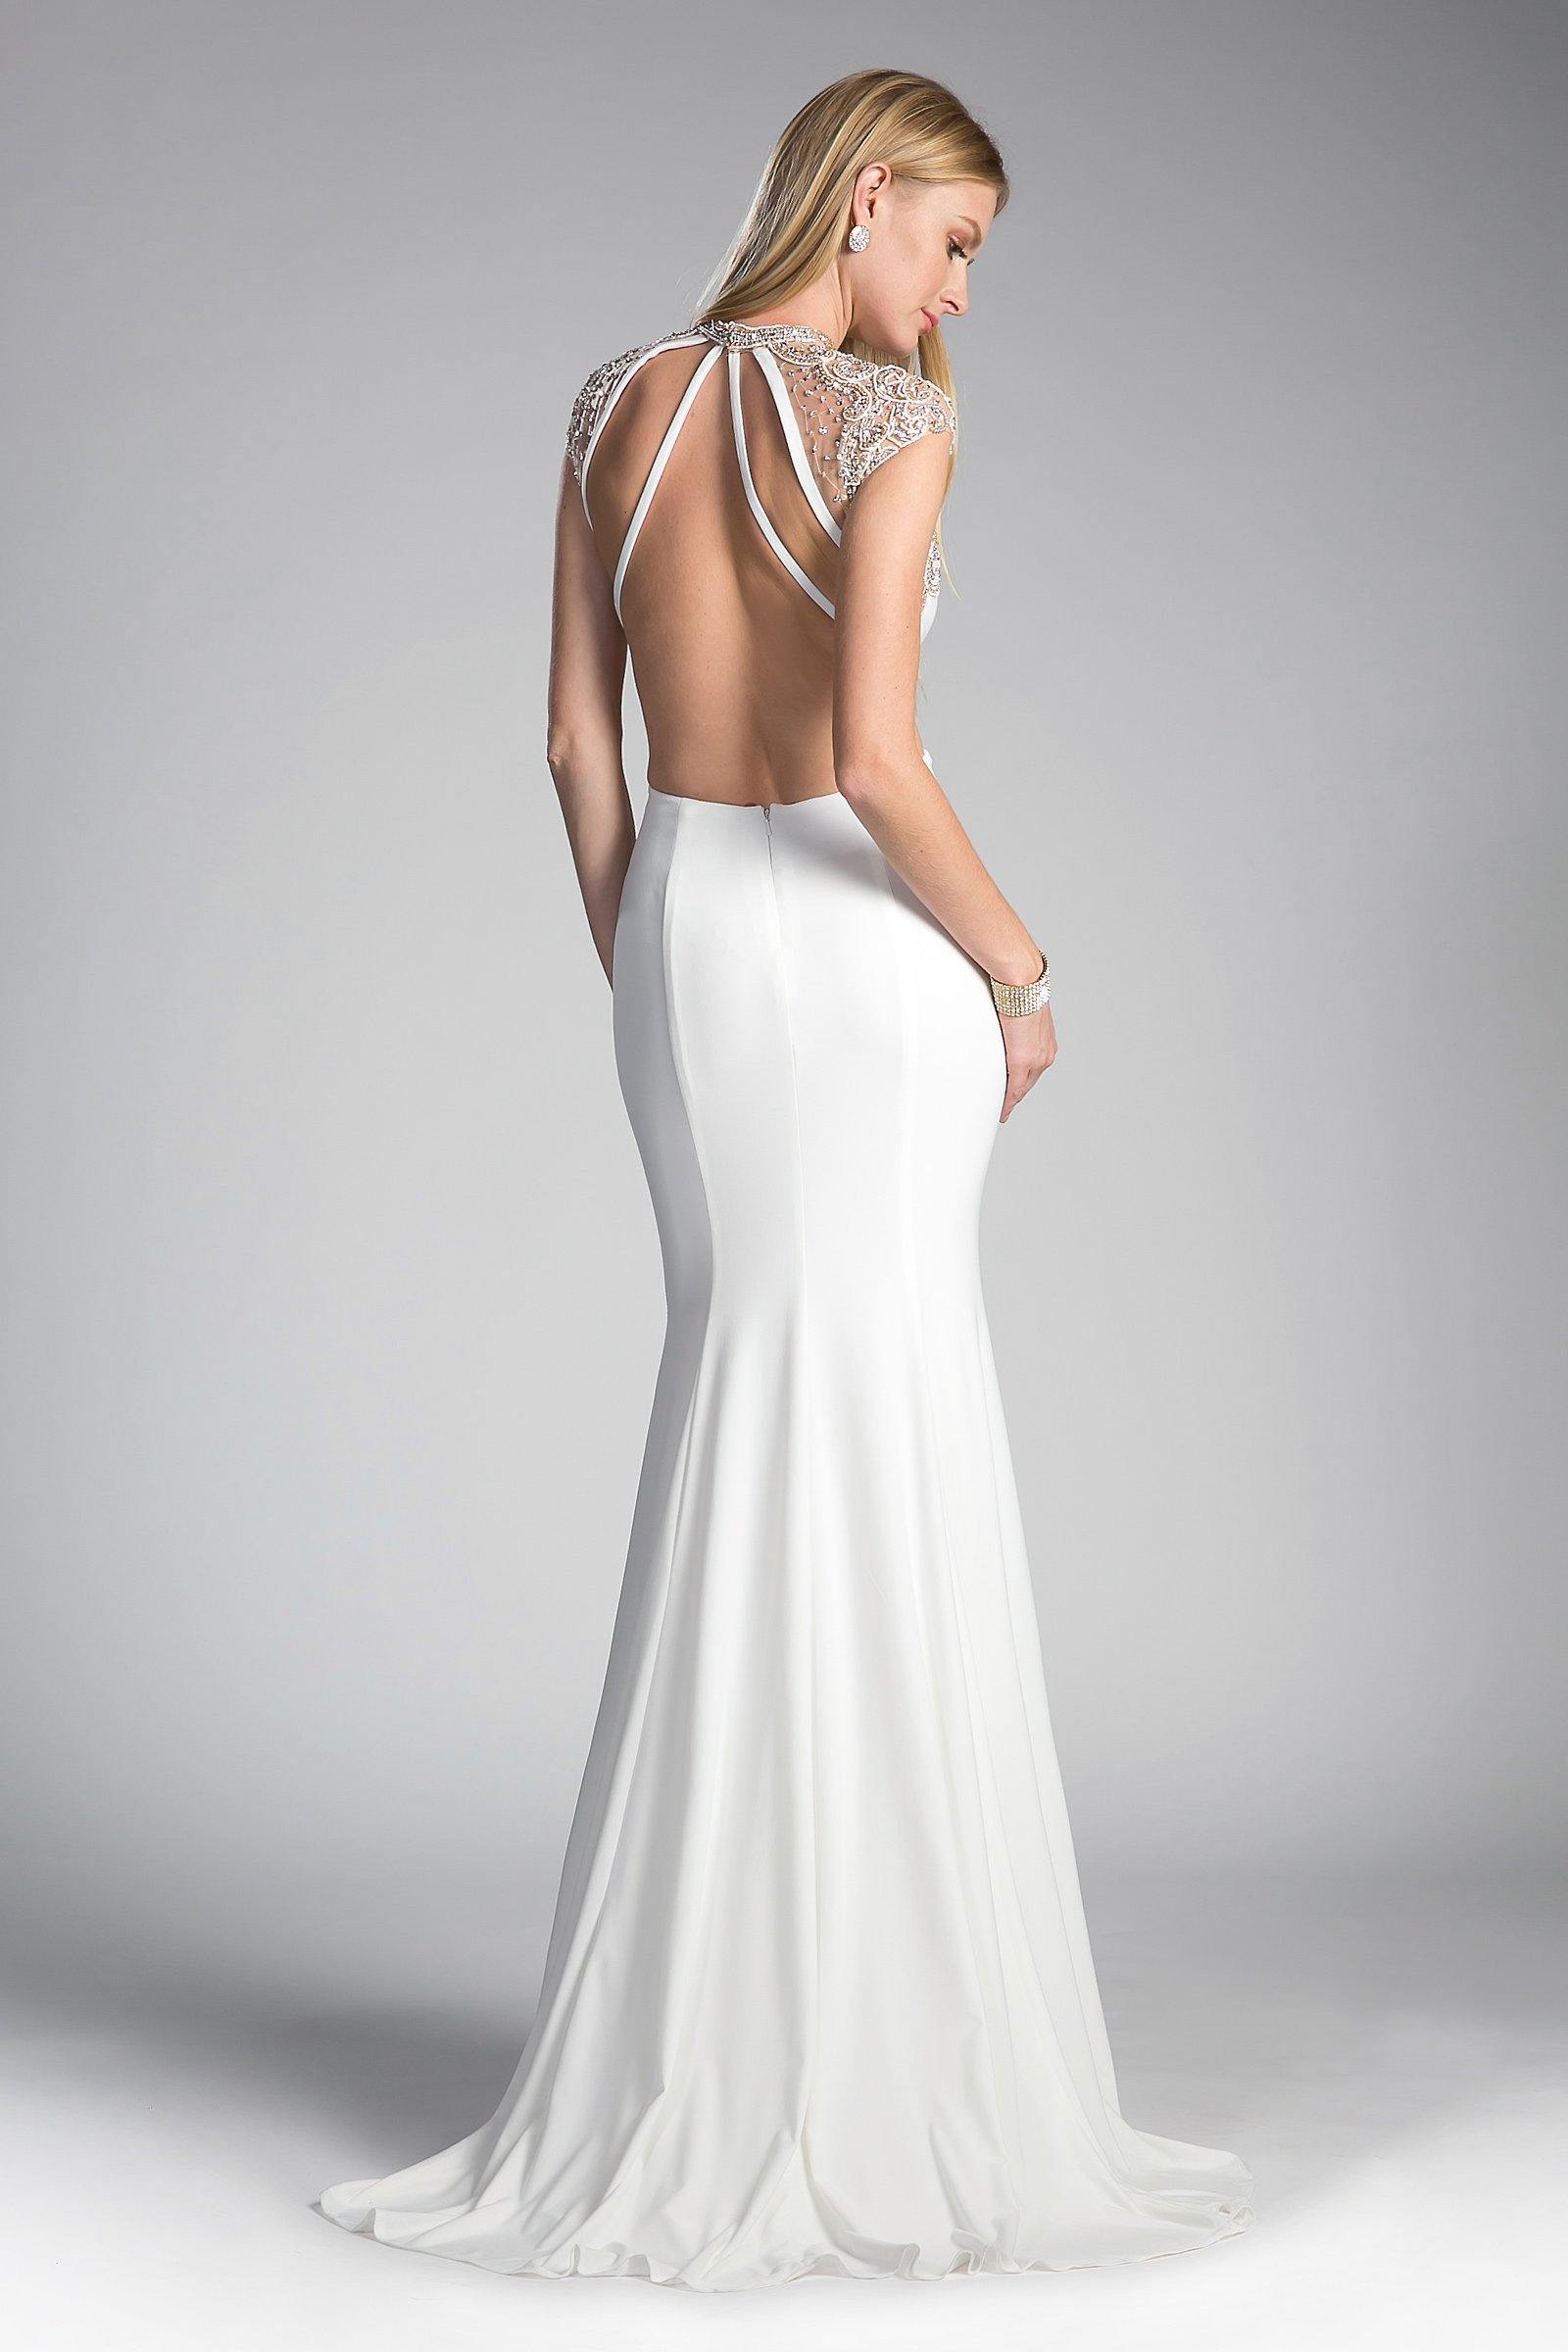 Beaded Stretch Knit Sheath Long Wedding Dress - The Dress Outlet